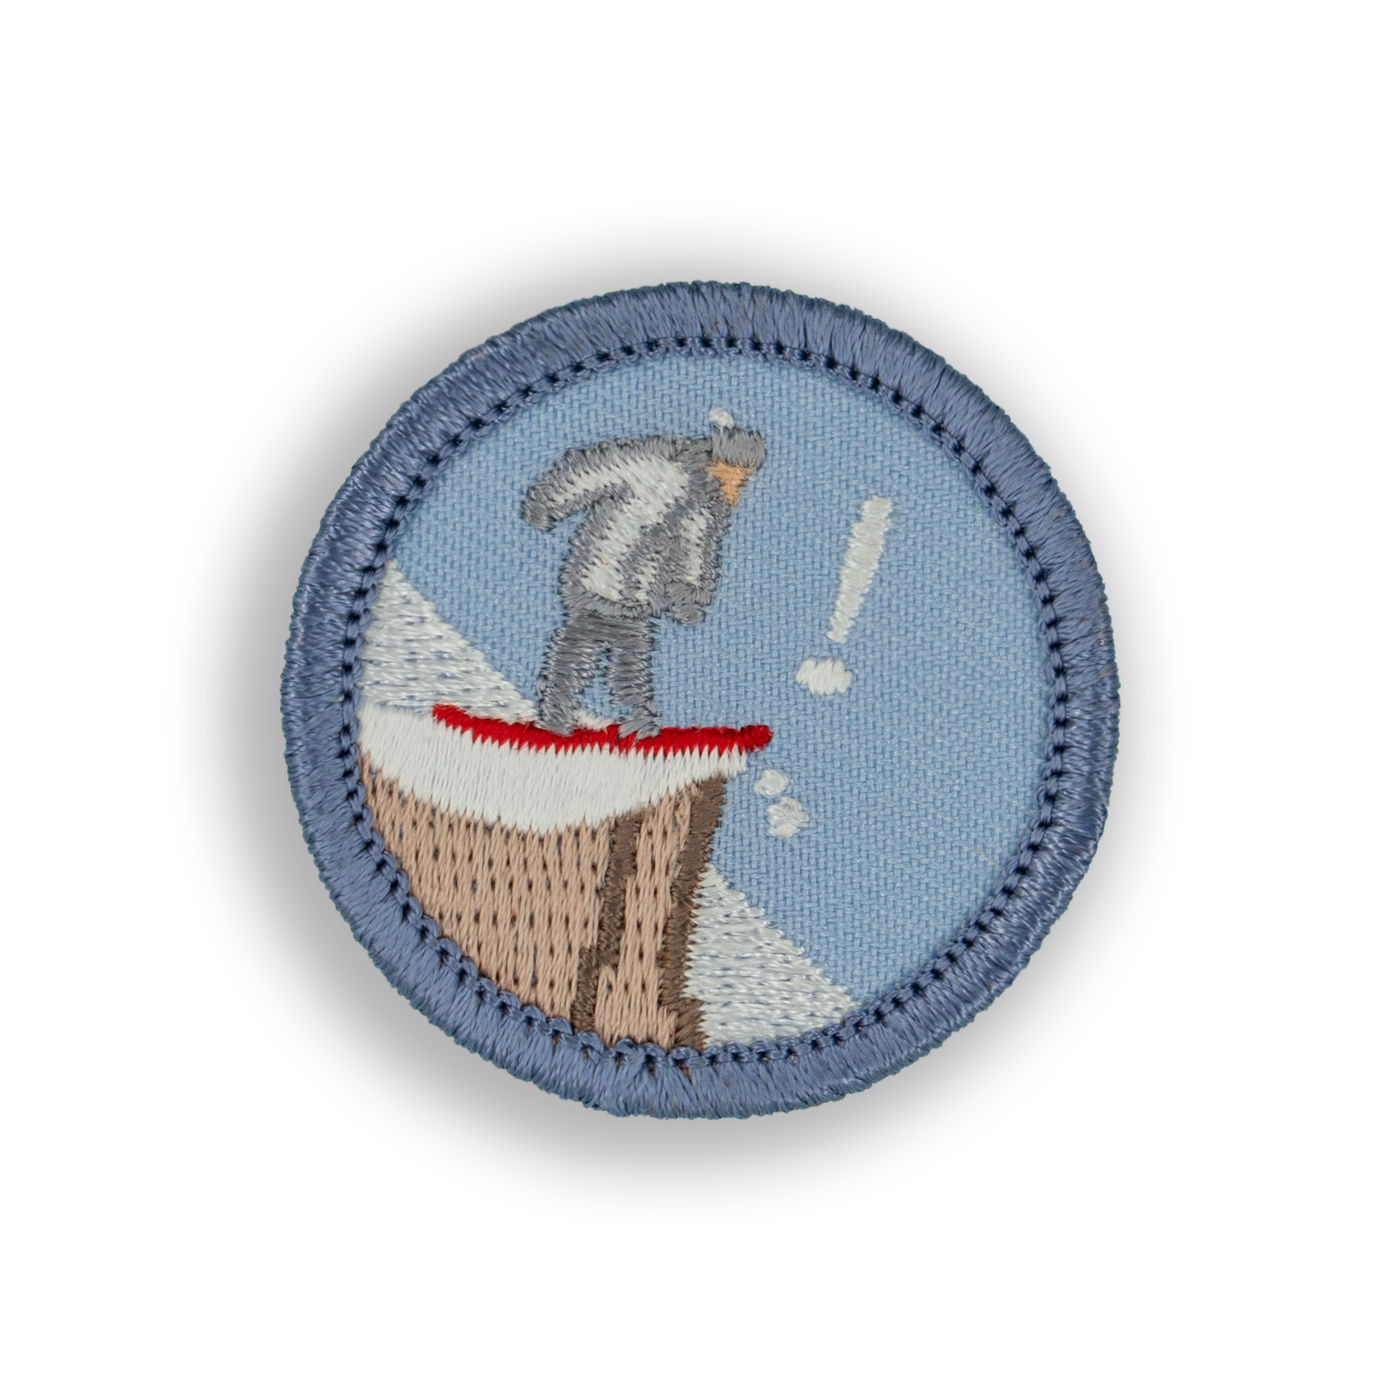 Drop-in Snowboard Patch | Demerit Wear - Fake Merit Badges